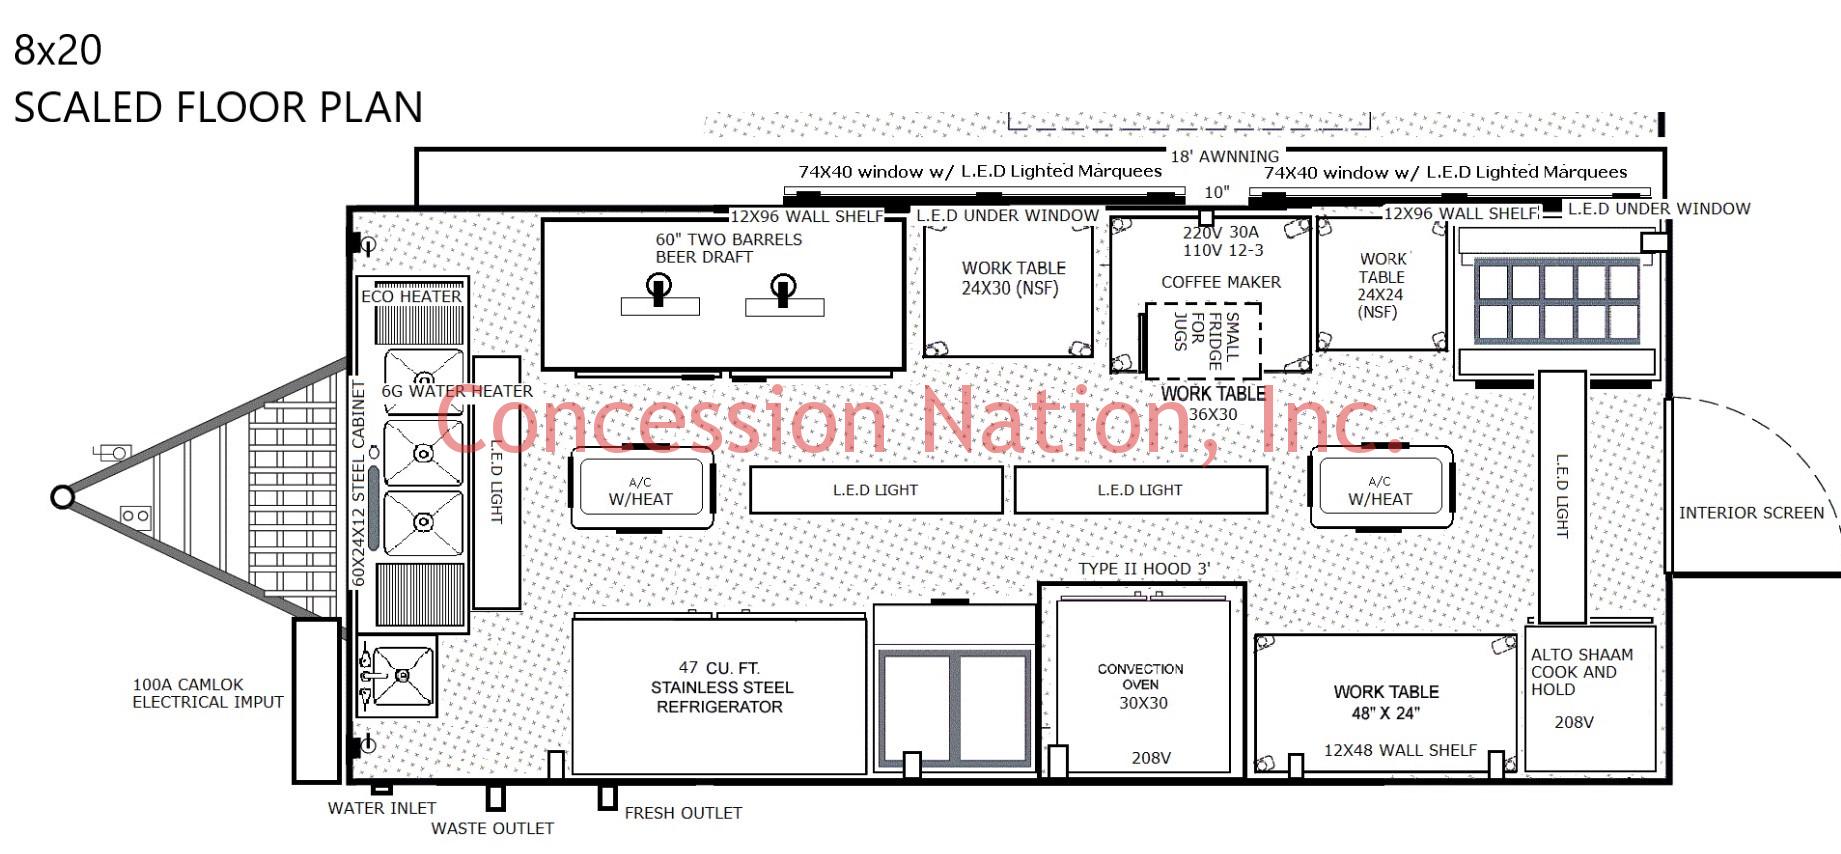 Centerplate #3 8x20 Scaled Floor Plan - Custom Food Trucks | Concession